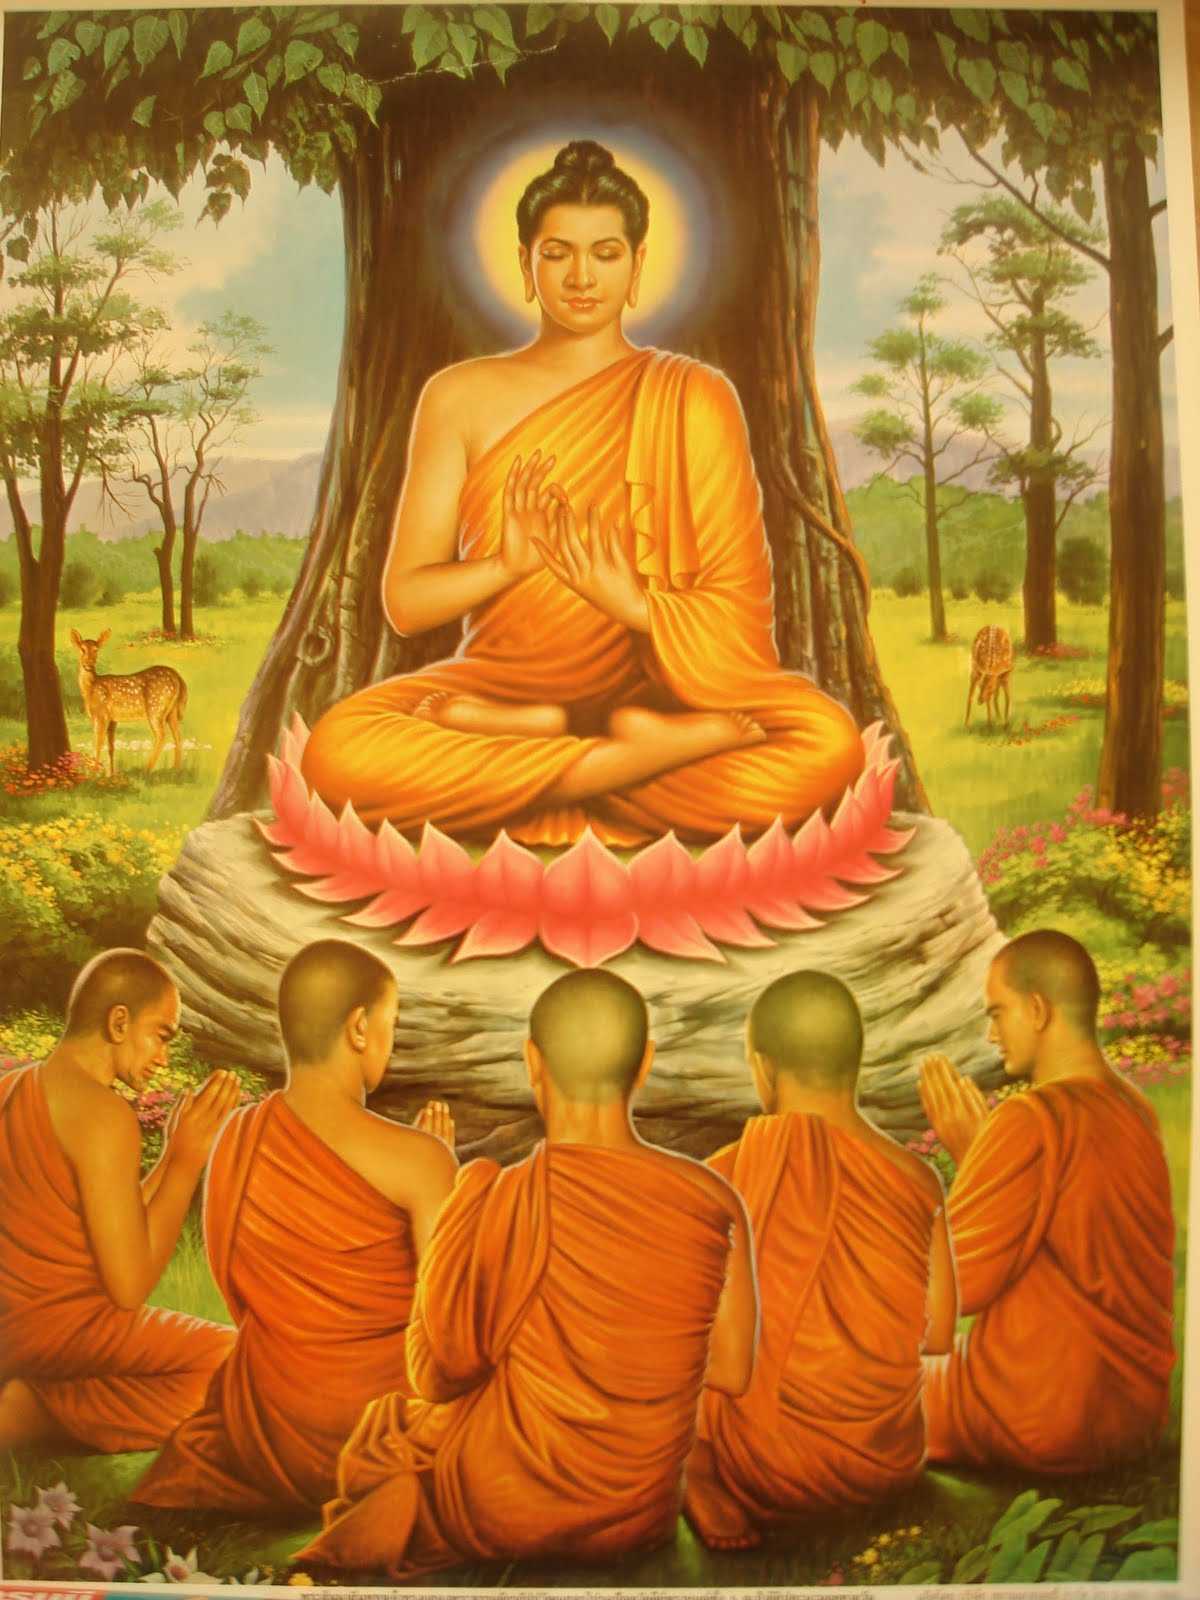 Проповедь будды. Сиддхартха Гаутама Шакьямуни. Сиддхартха Гаутама Будда. Будда принц Сиддхартха Гаутама. Будда Гаутама и Будда Шакьямуни.